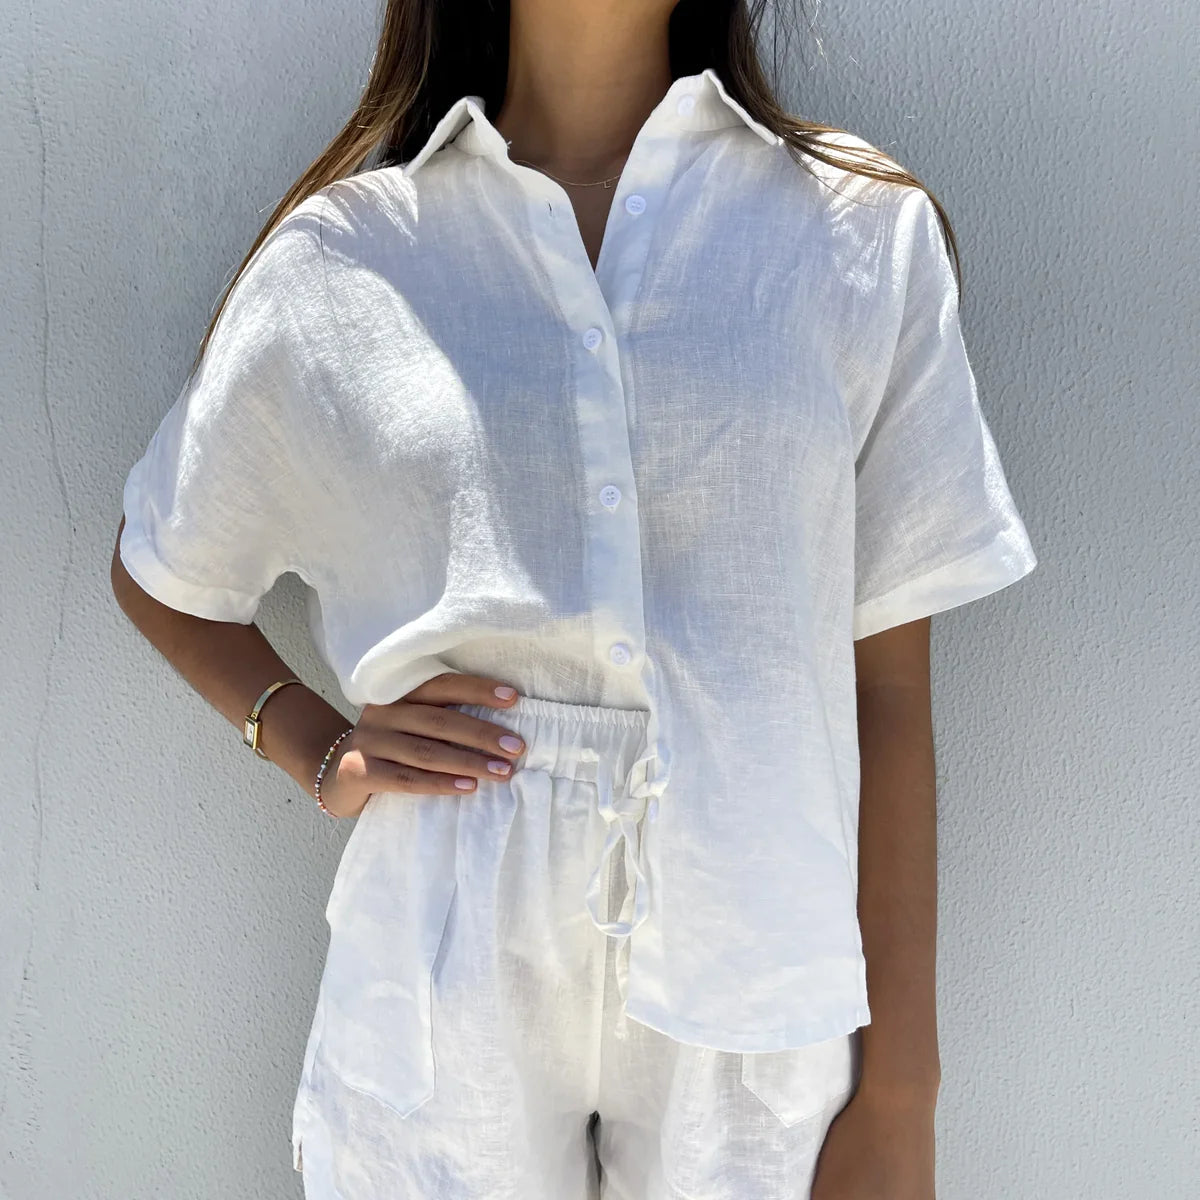 Bronte Shirt - White